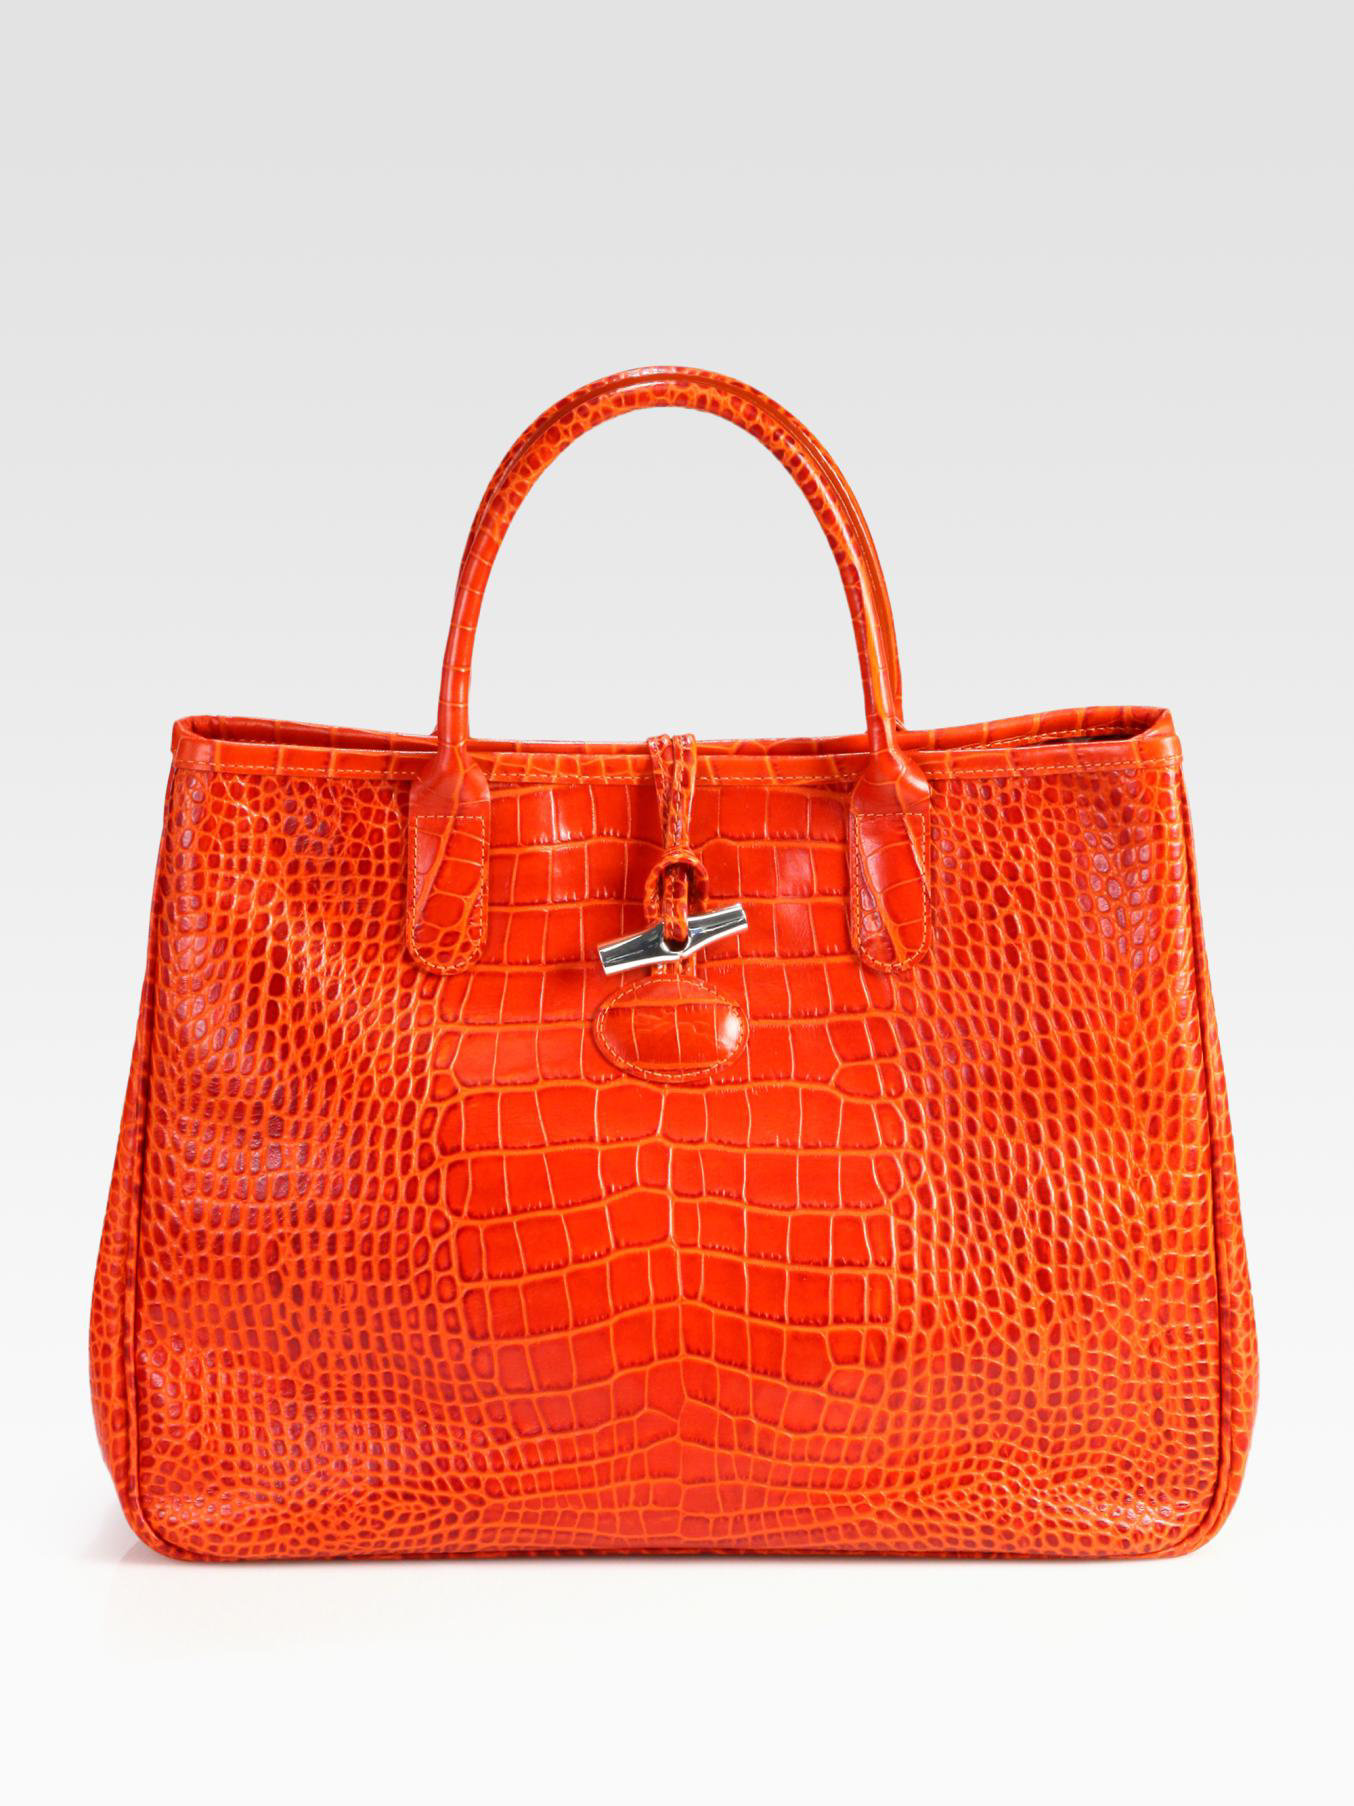 Longchamp Medium Roseau Leather Tote Bag